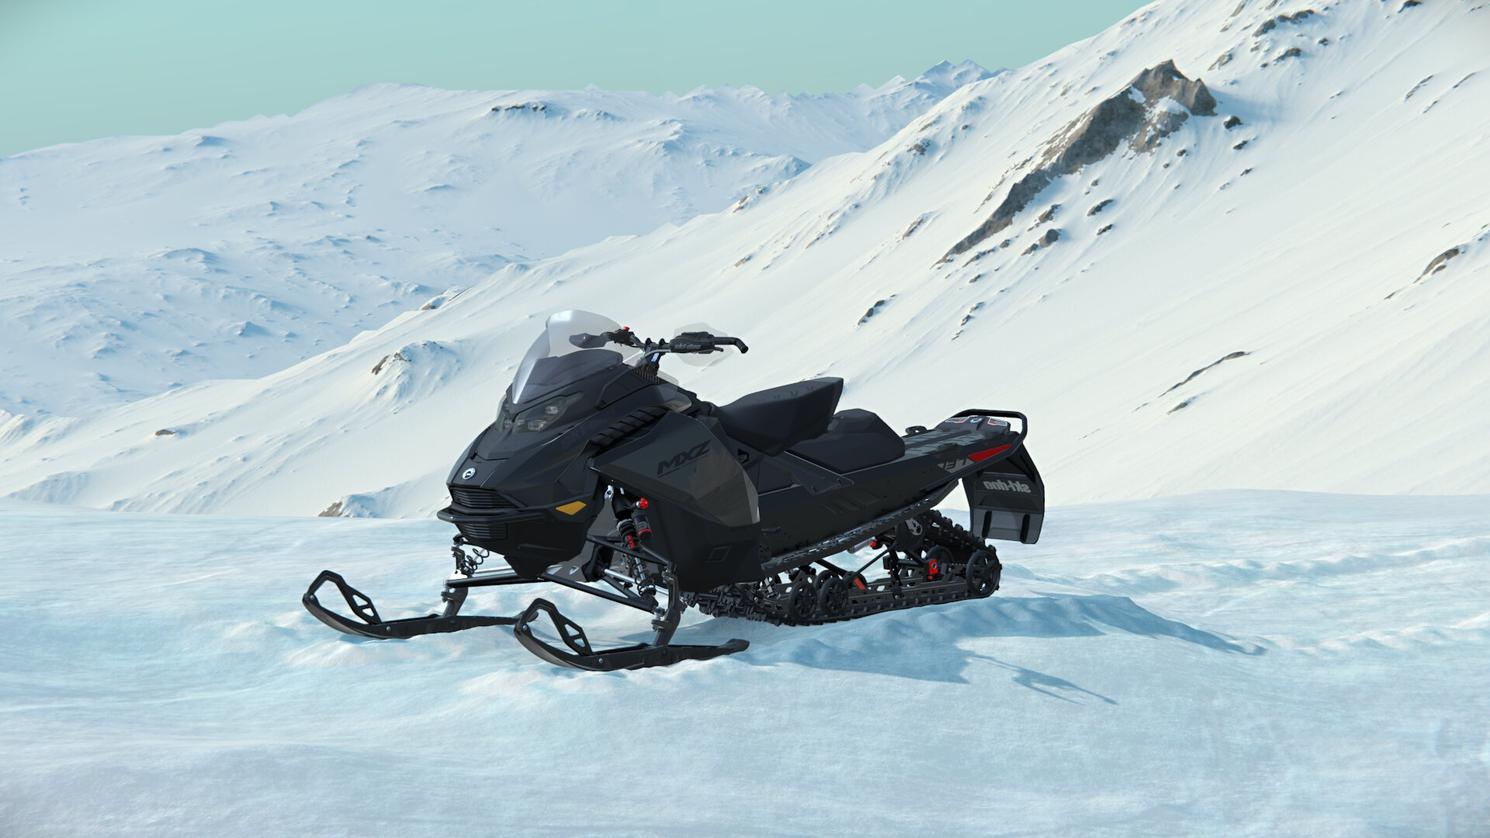 2024 Ski-Doo MXZ Adrenaline ens. Blizzard - UDRC